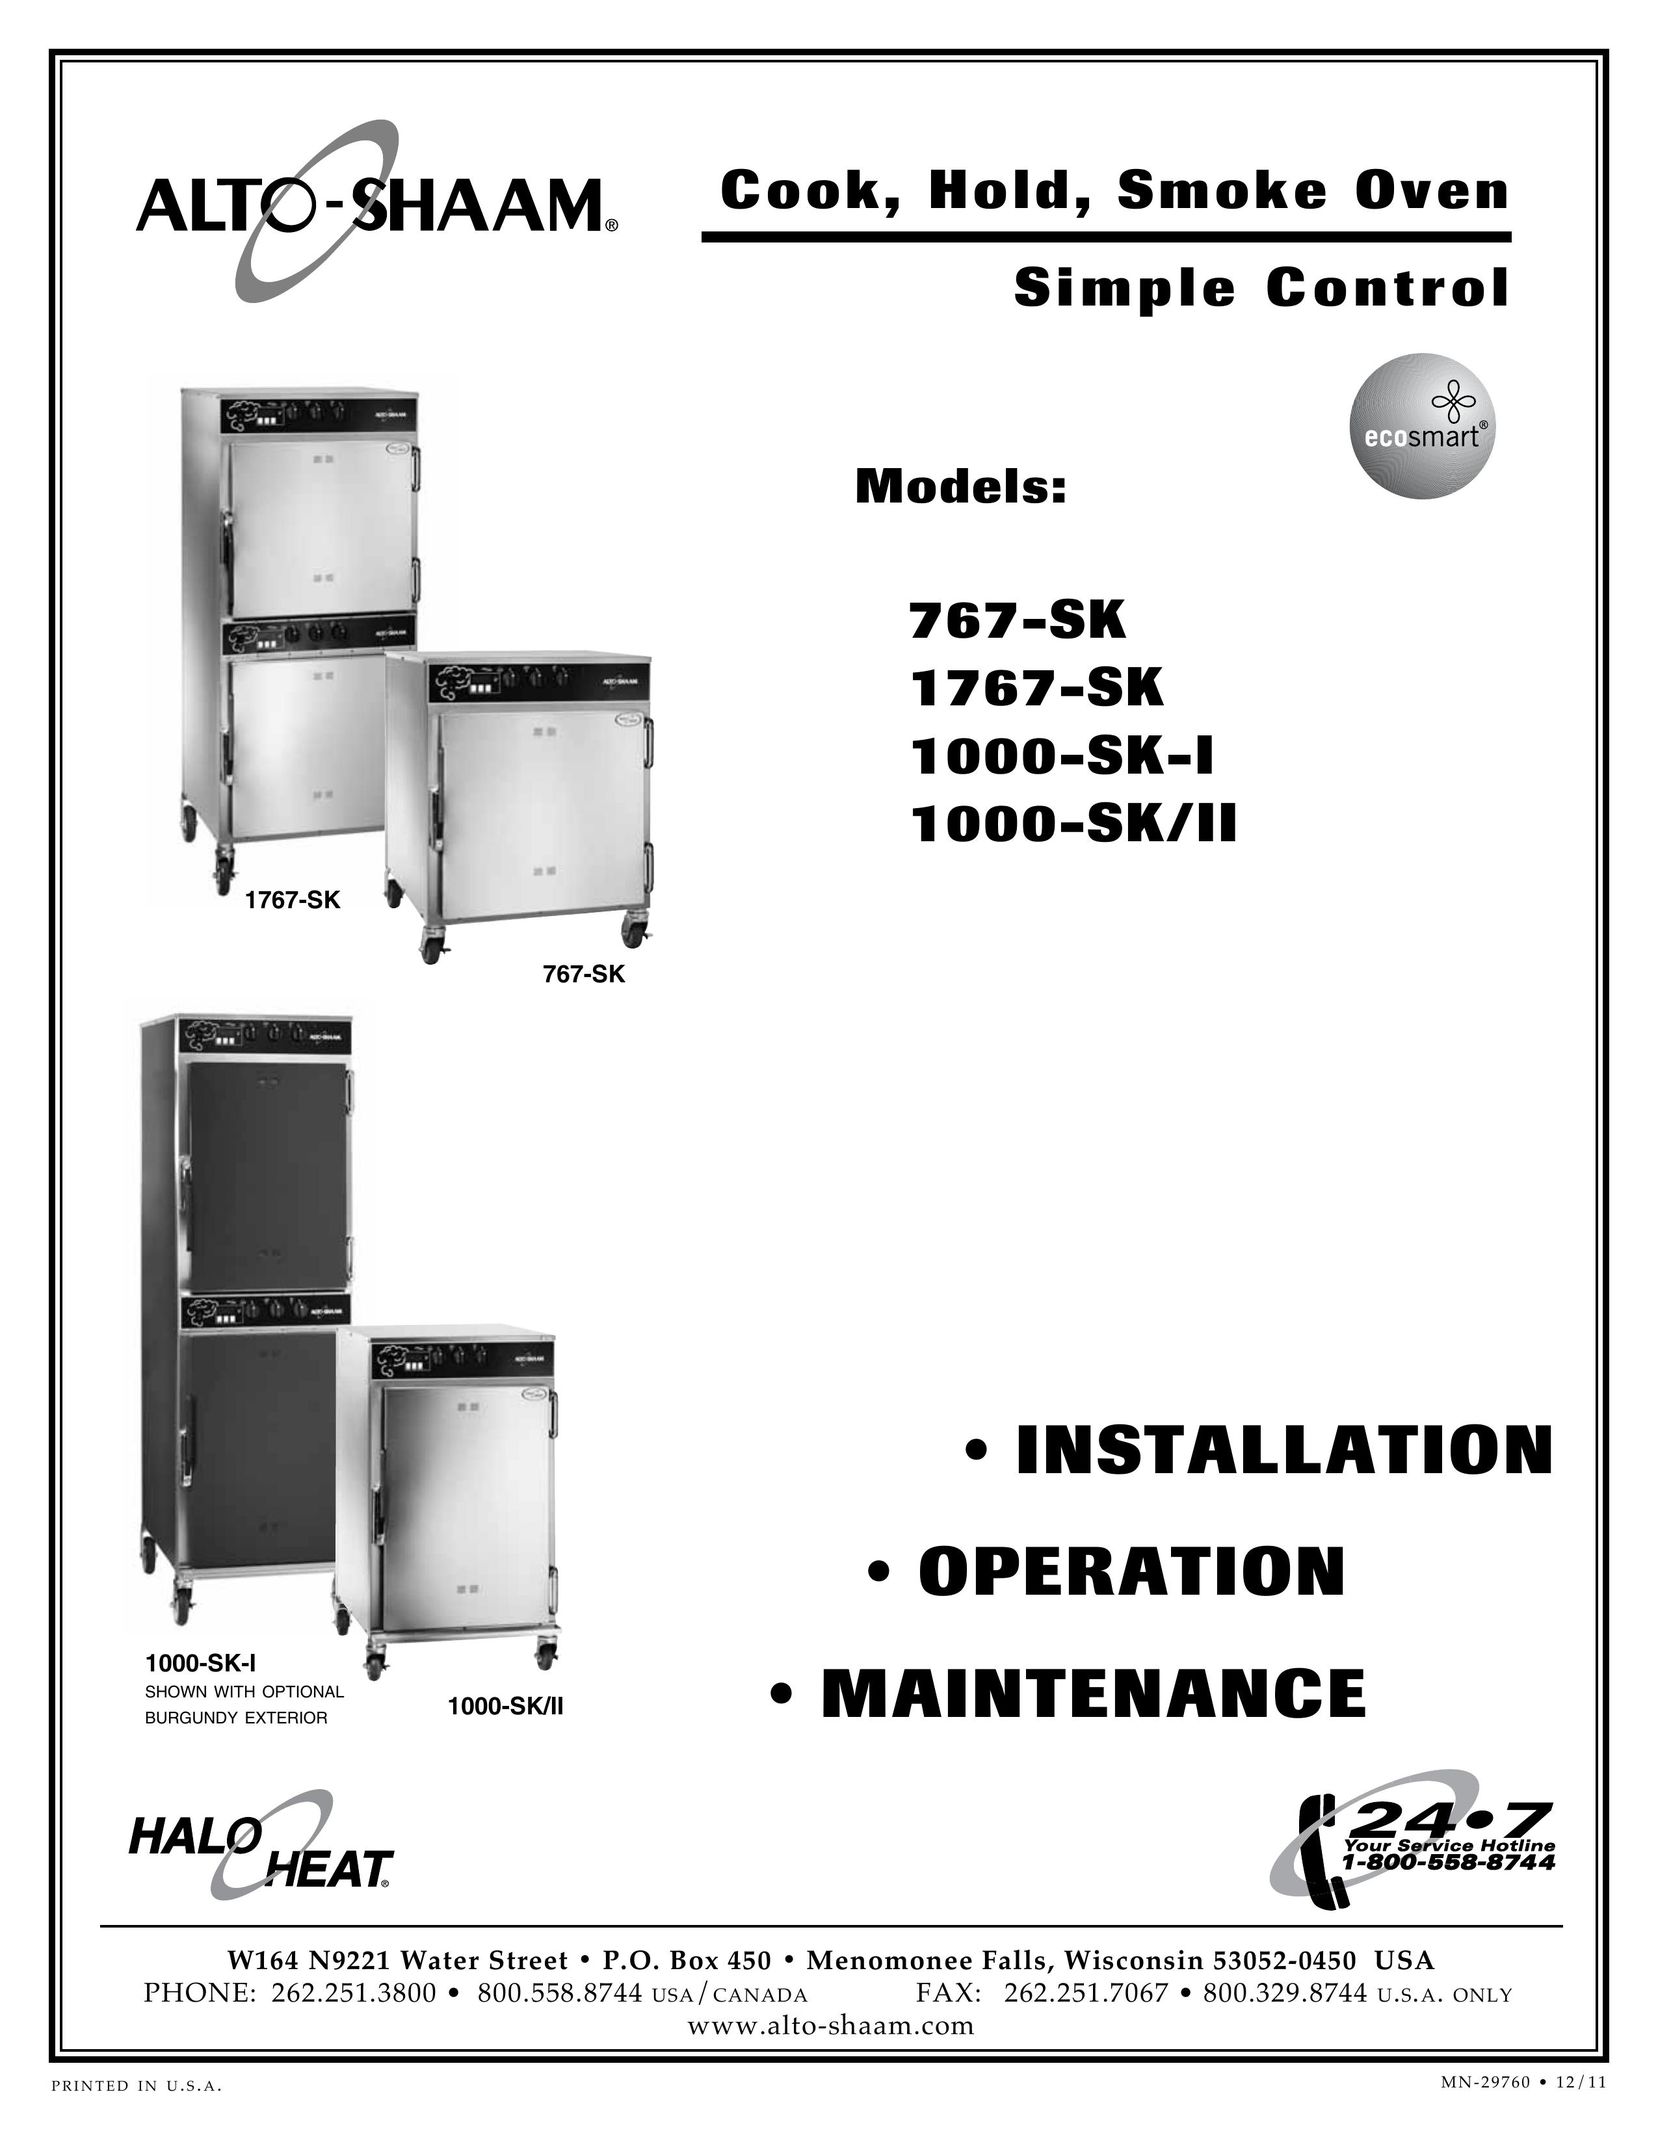 Alto-Shaam 1000-SK-I Oven User Manual